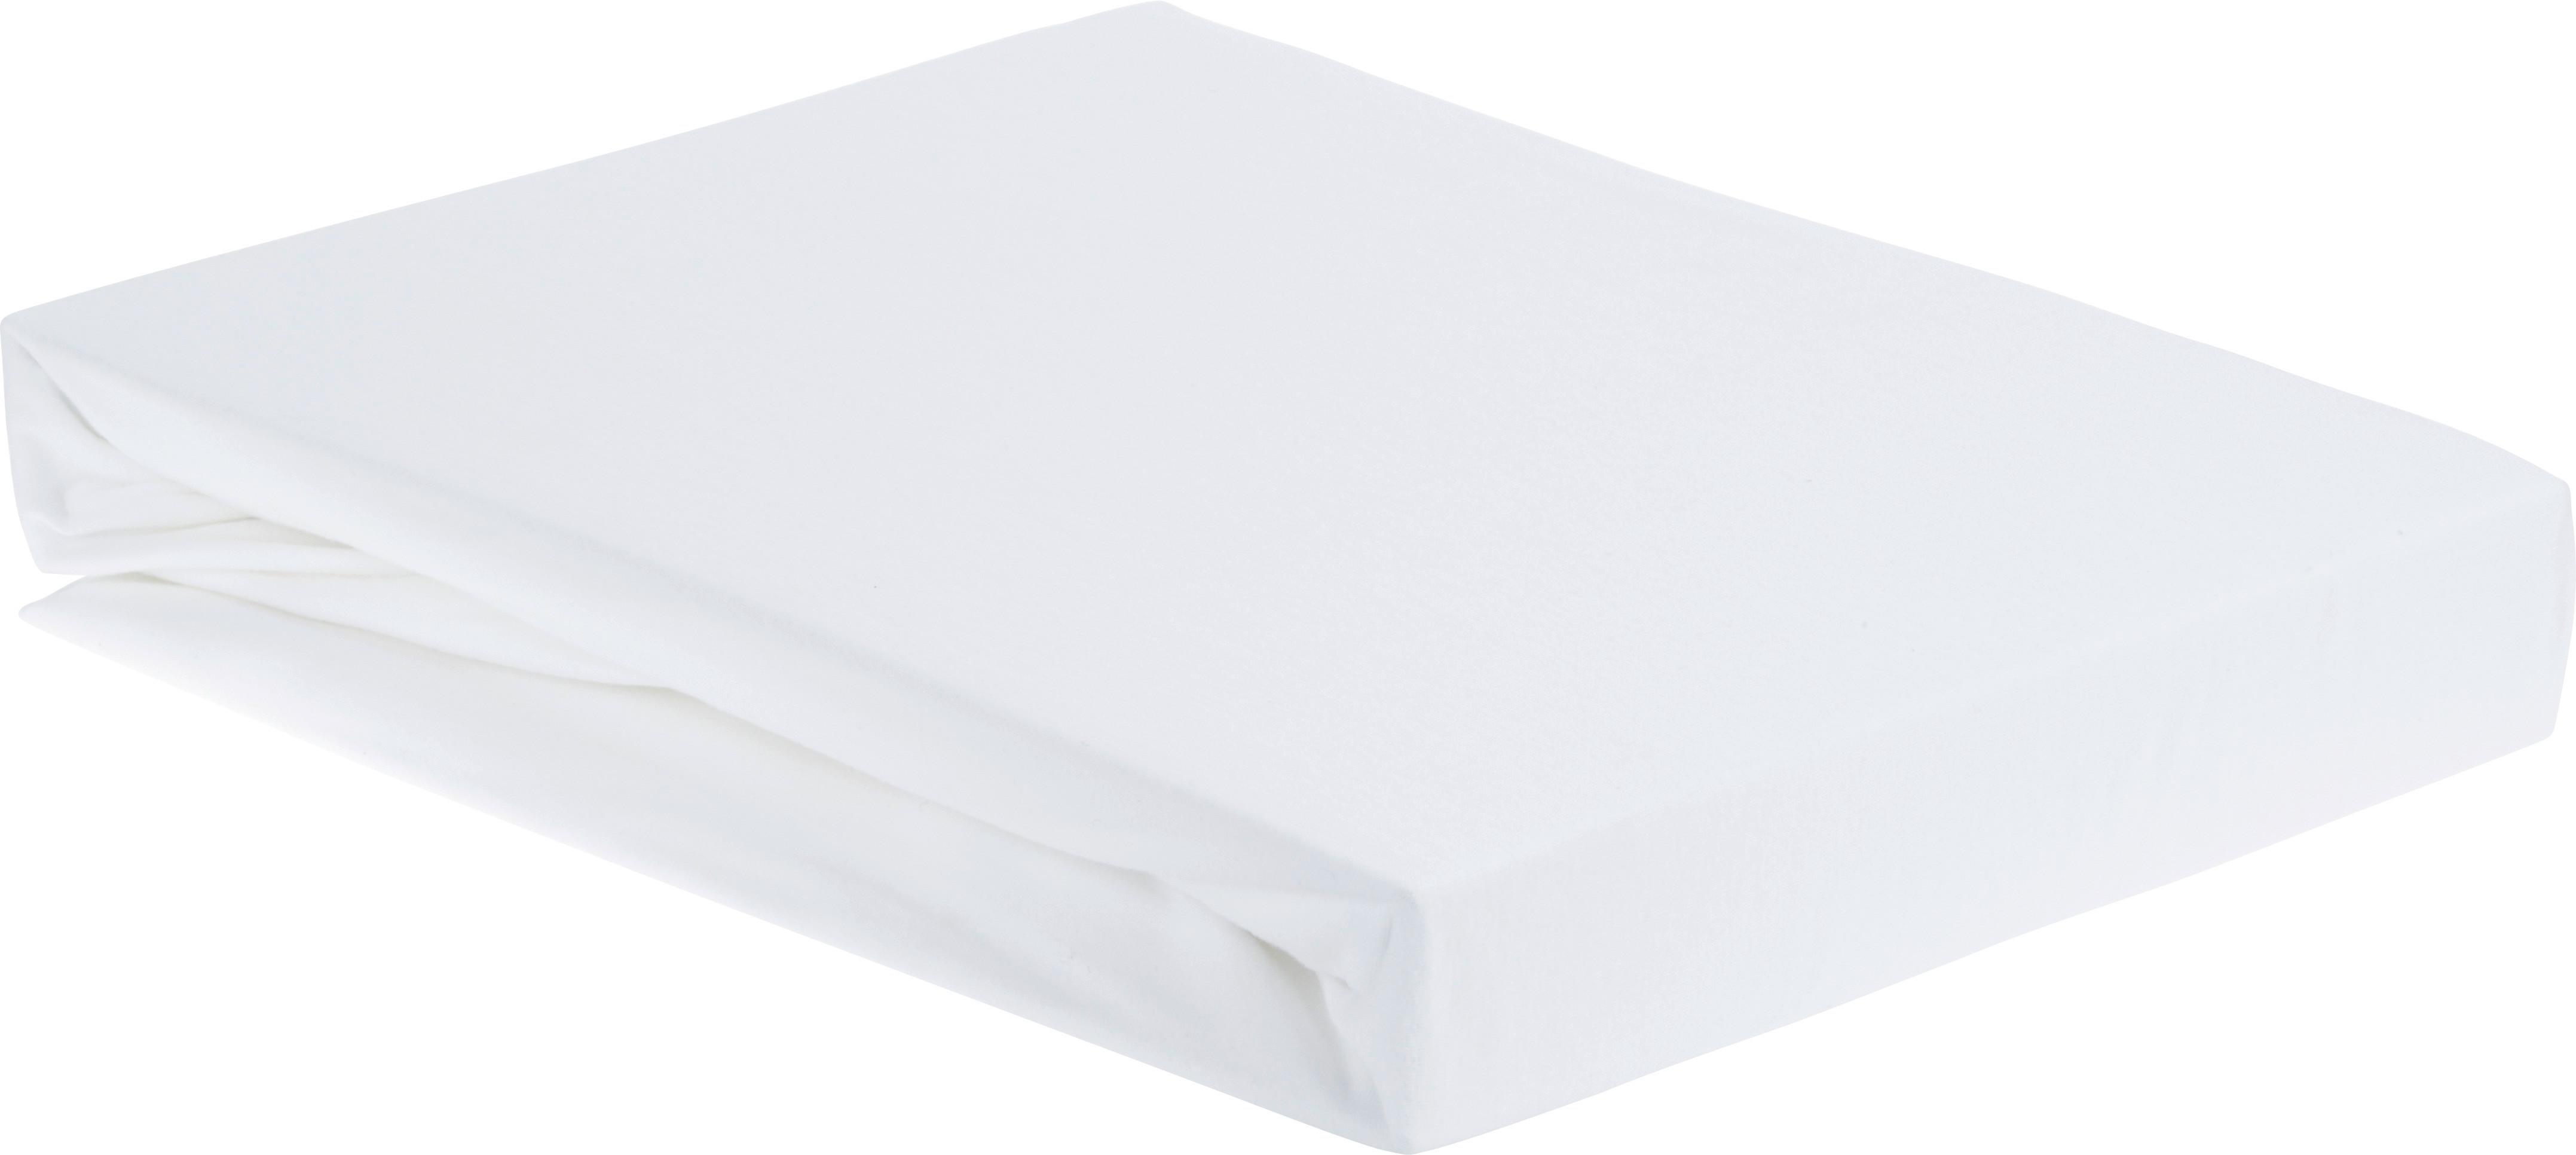 Cearșaf cu elastic Elasthan - alb, textil (100/200/28cm) - Premium Living